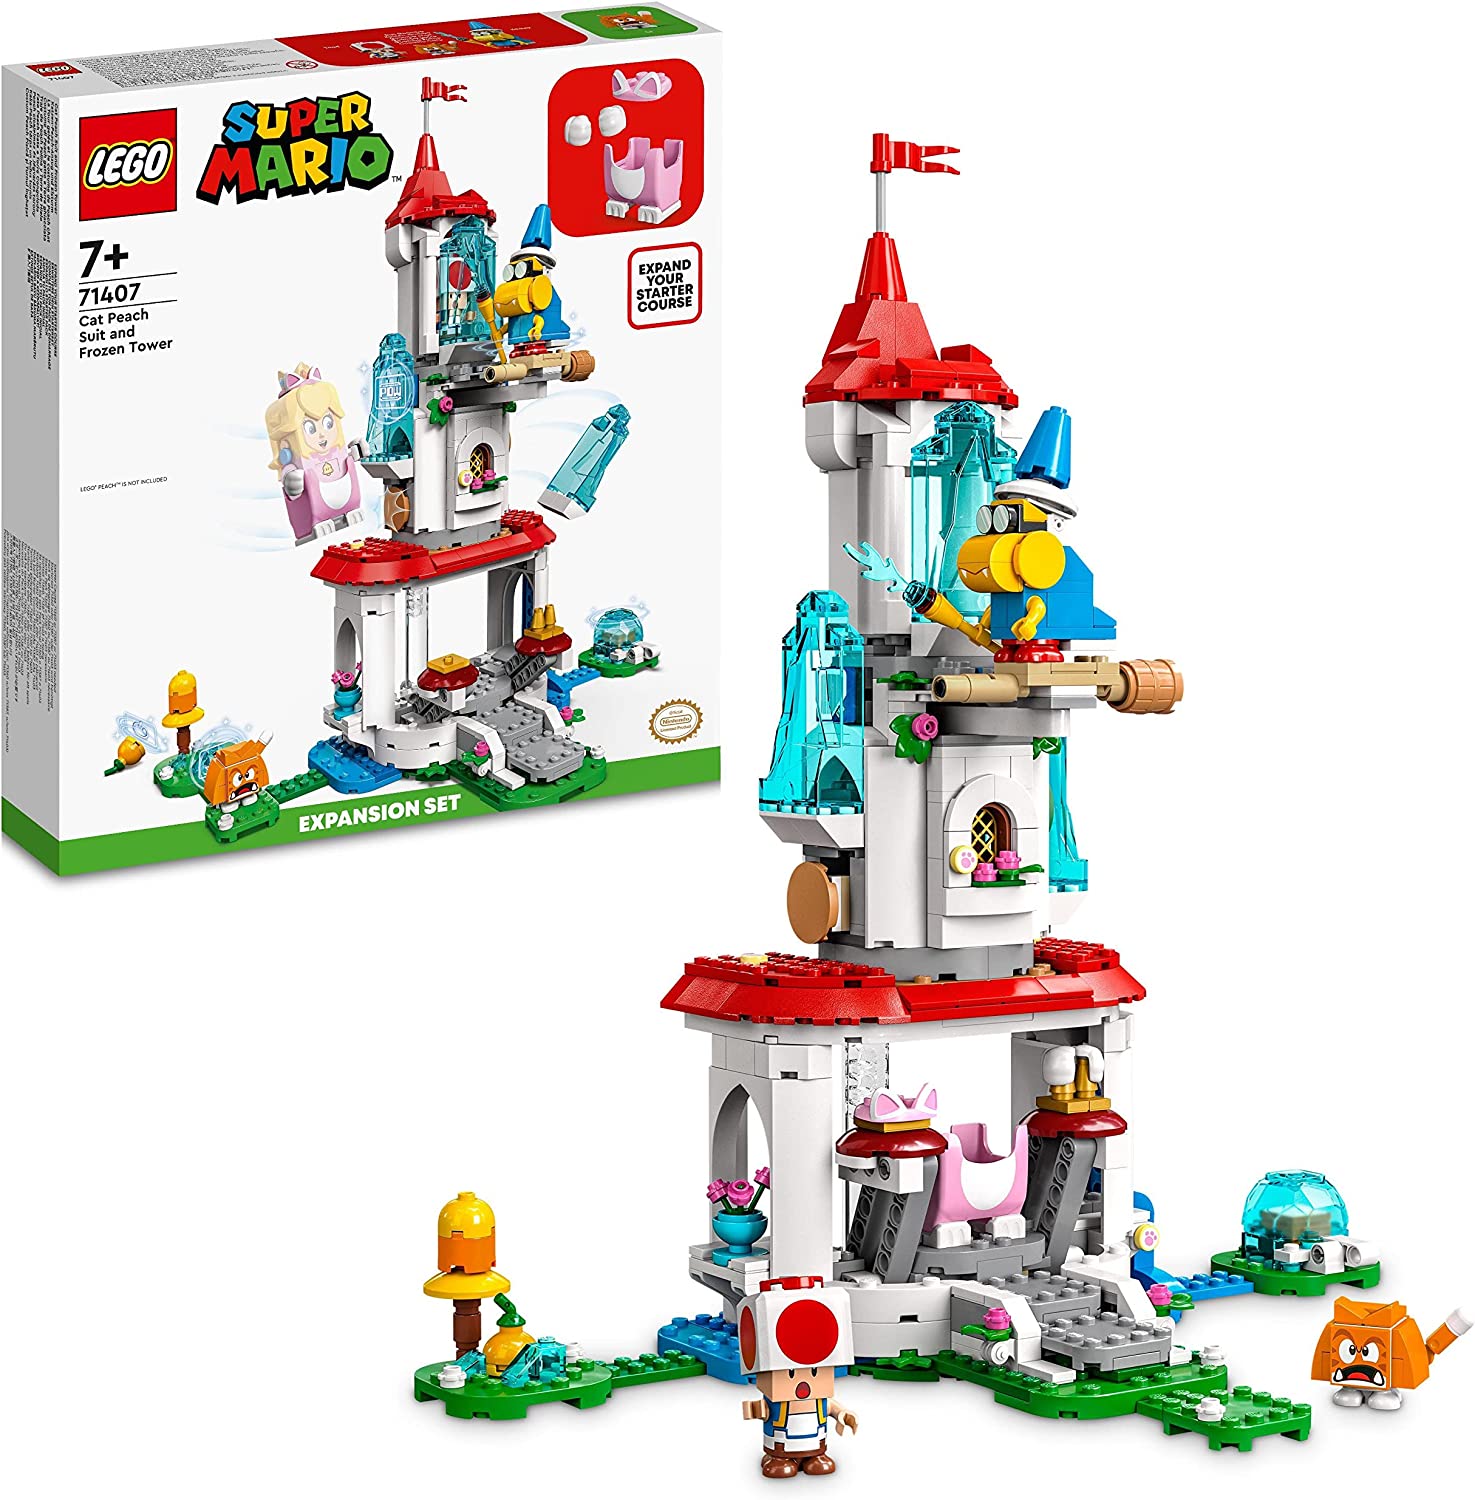 Lego Super Mario Cat Peach and Frozen Tower Set 